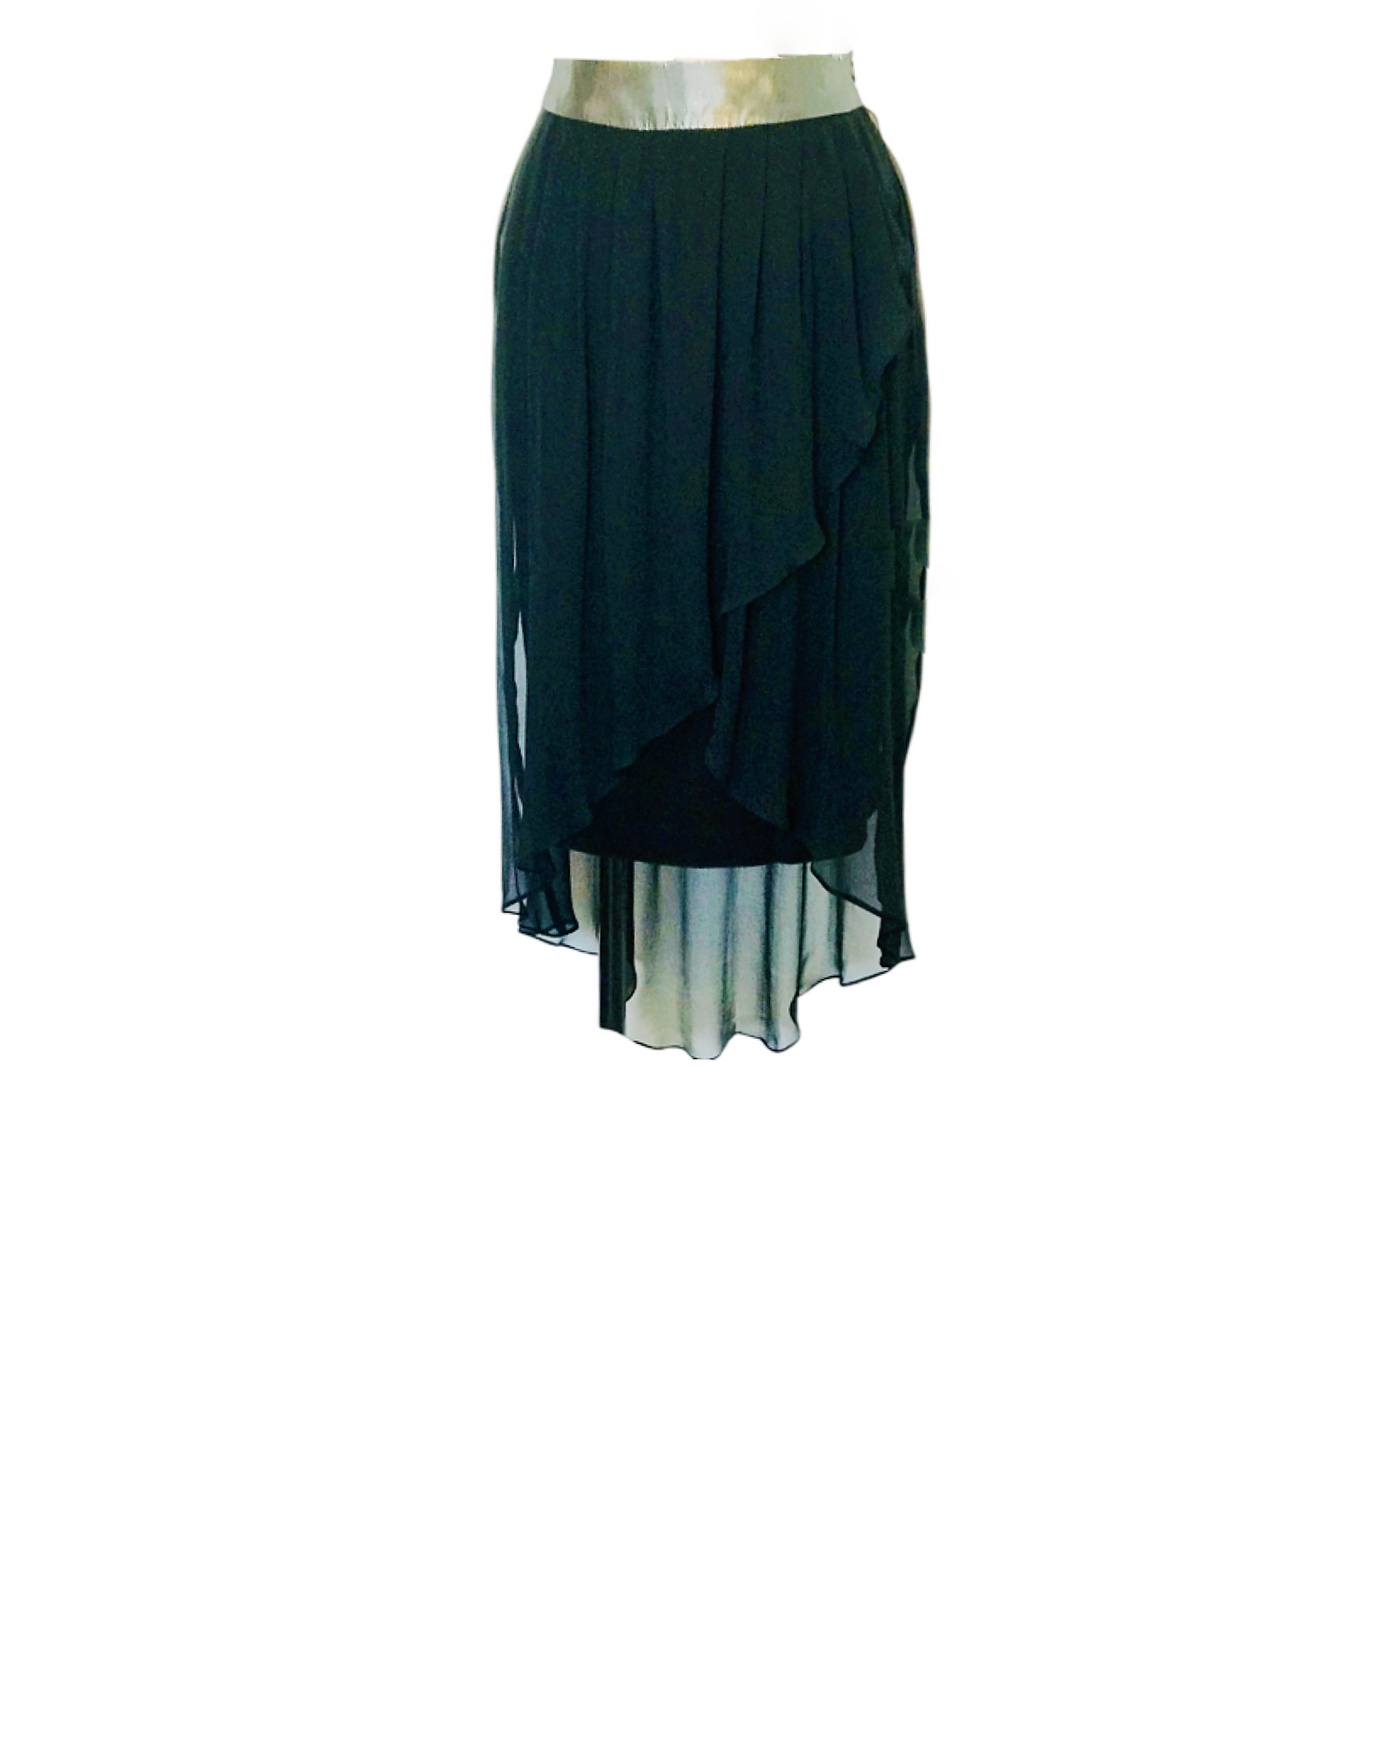 Black Wrap Silk chiffon skirt